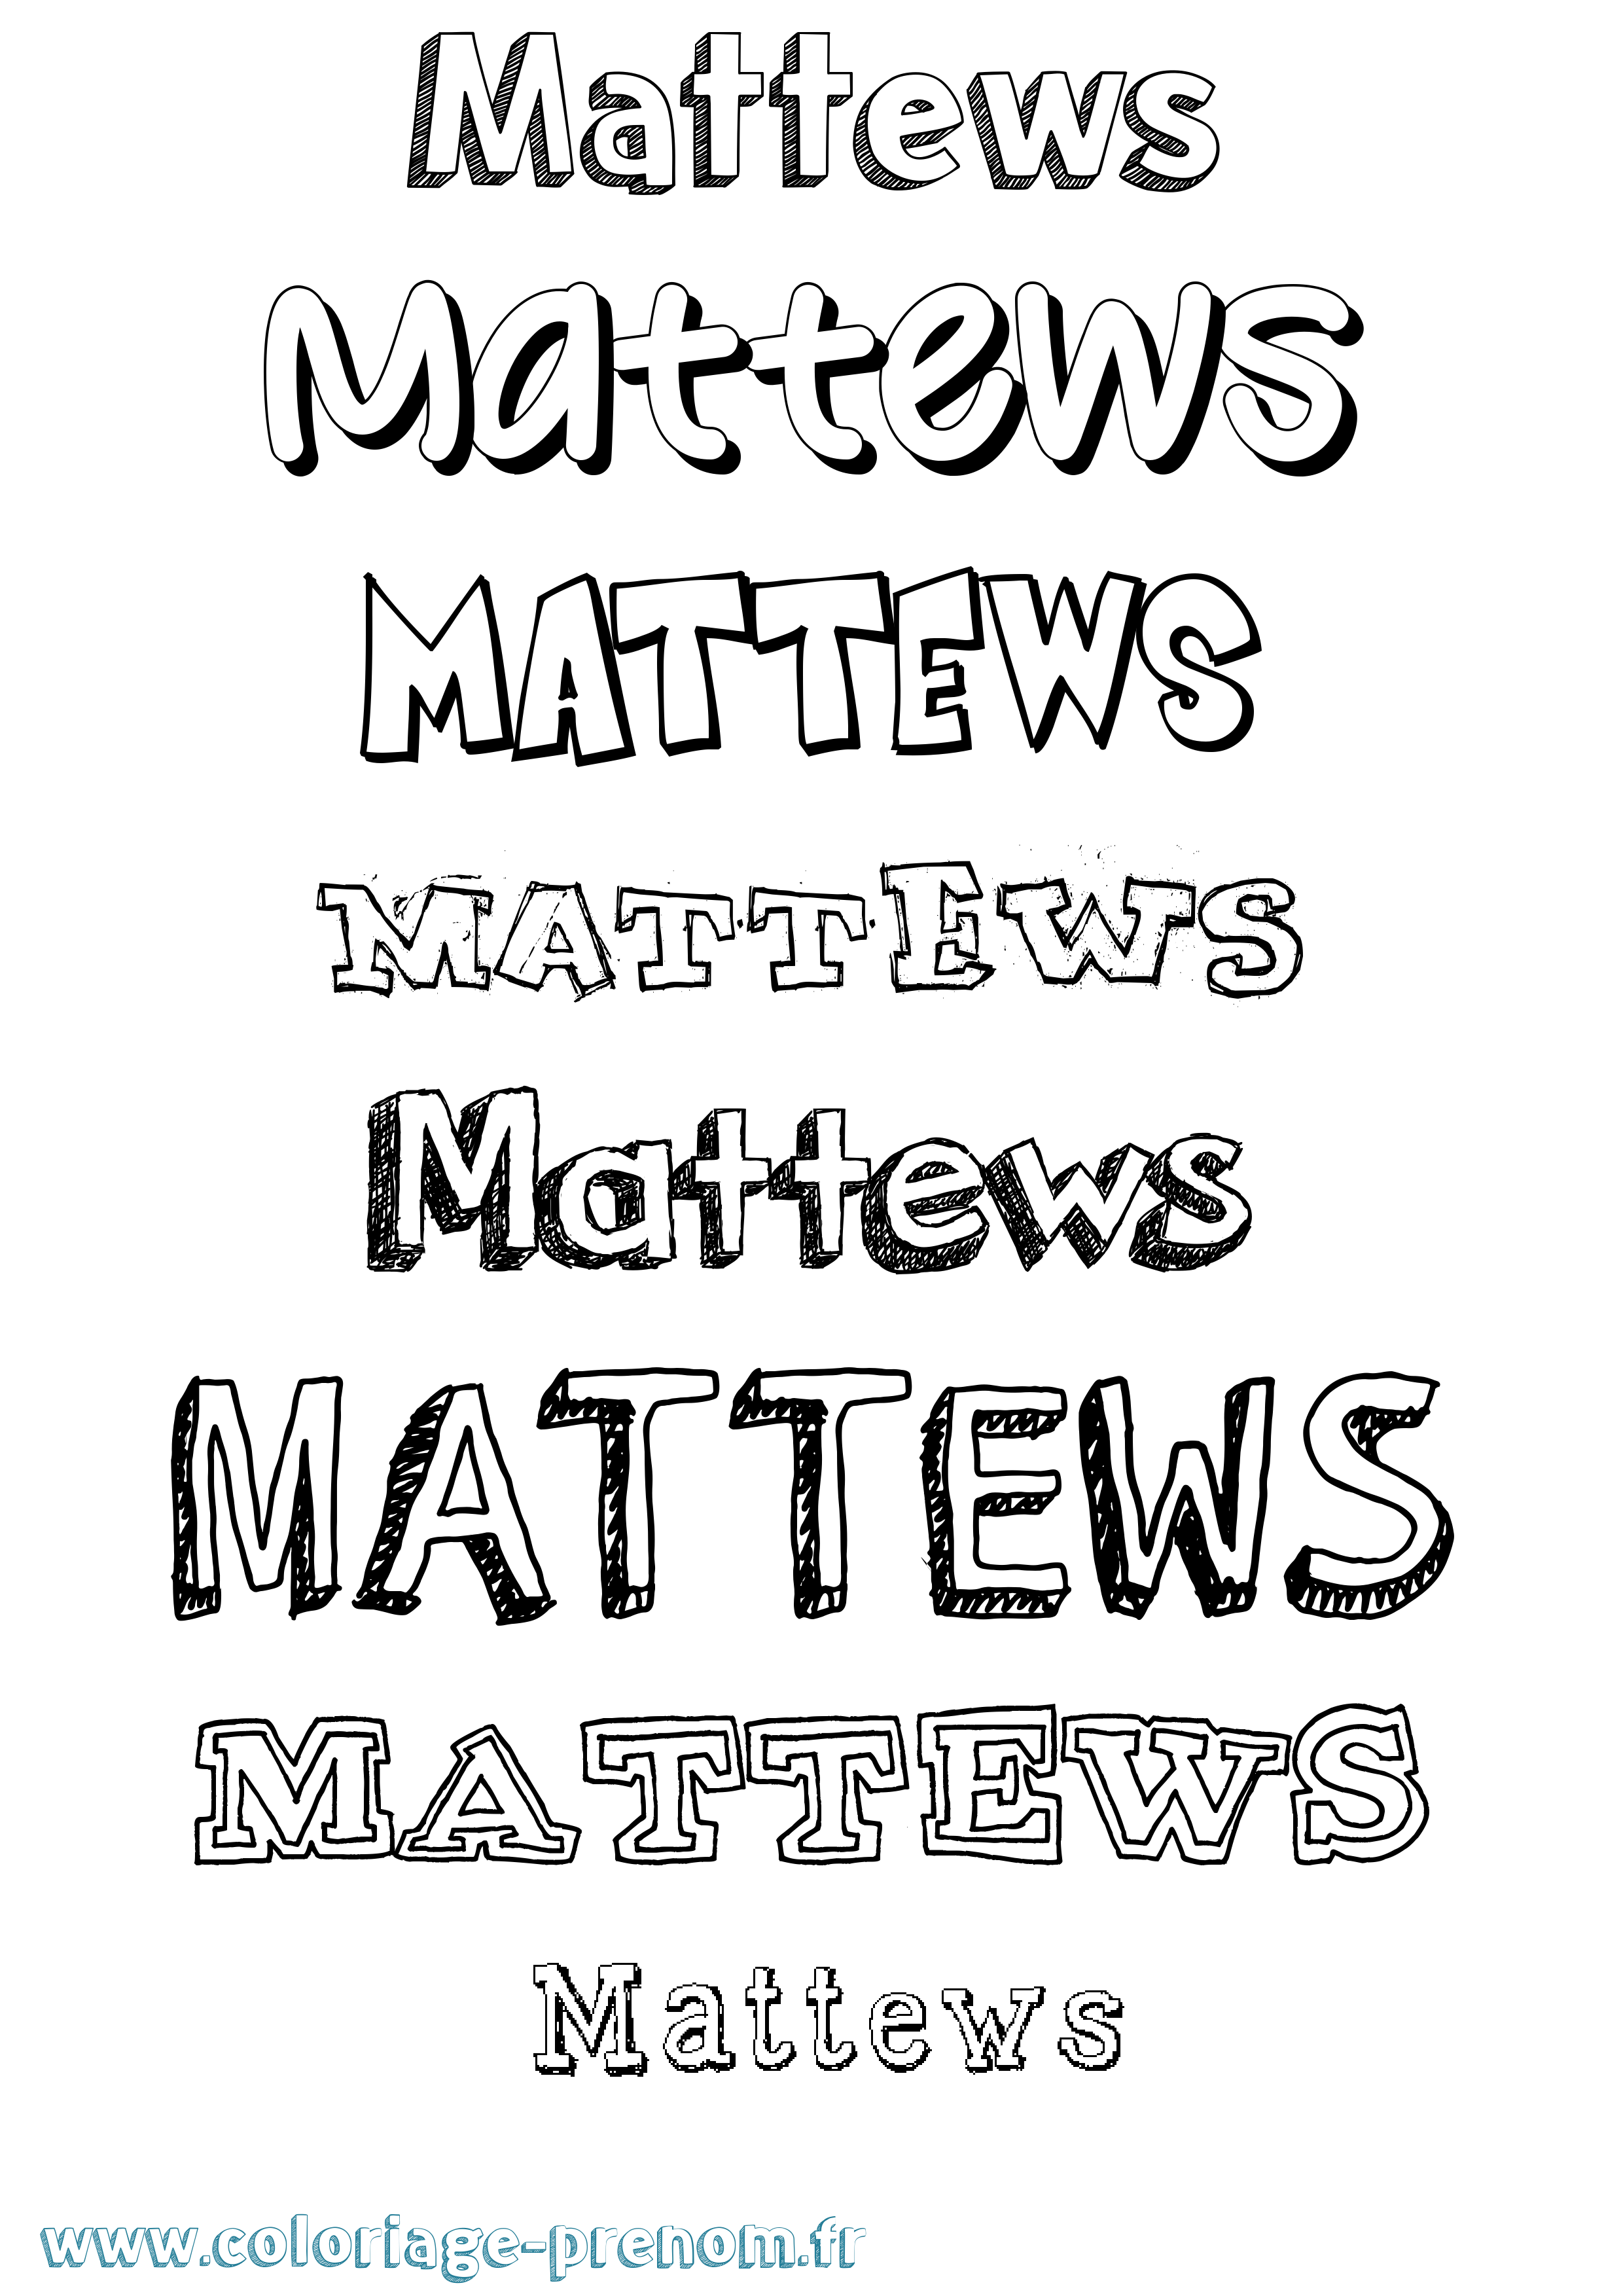 Coloriage prénom Mattews Dessiné